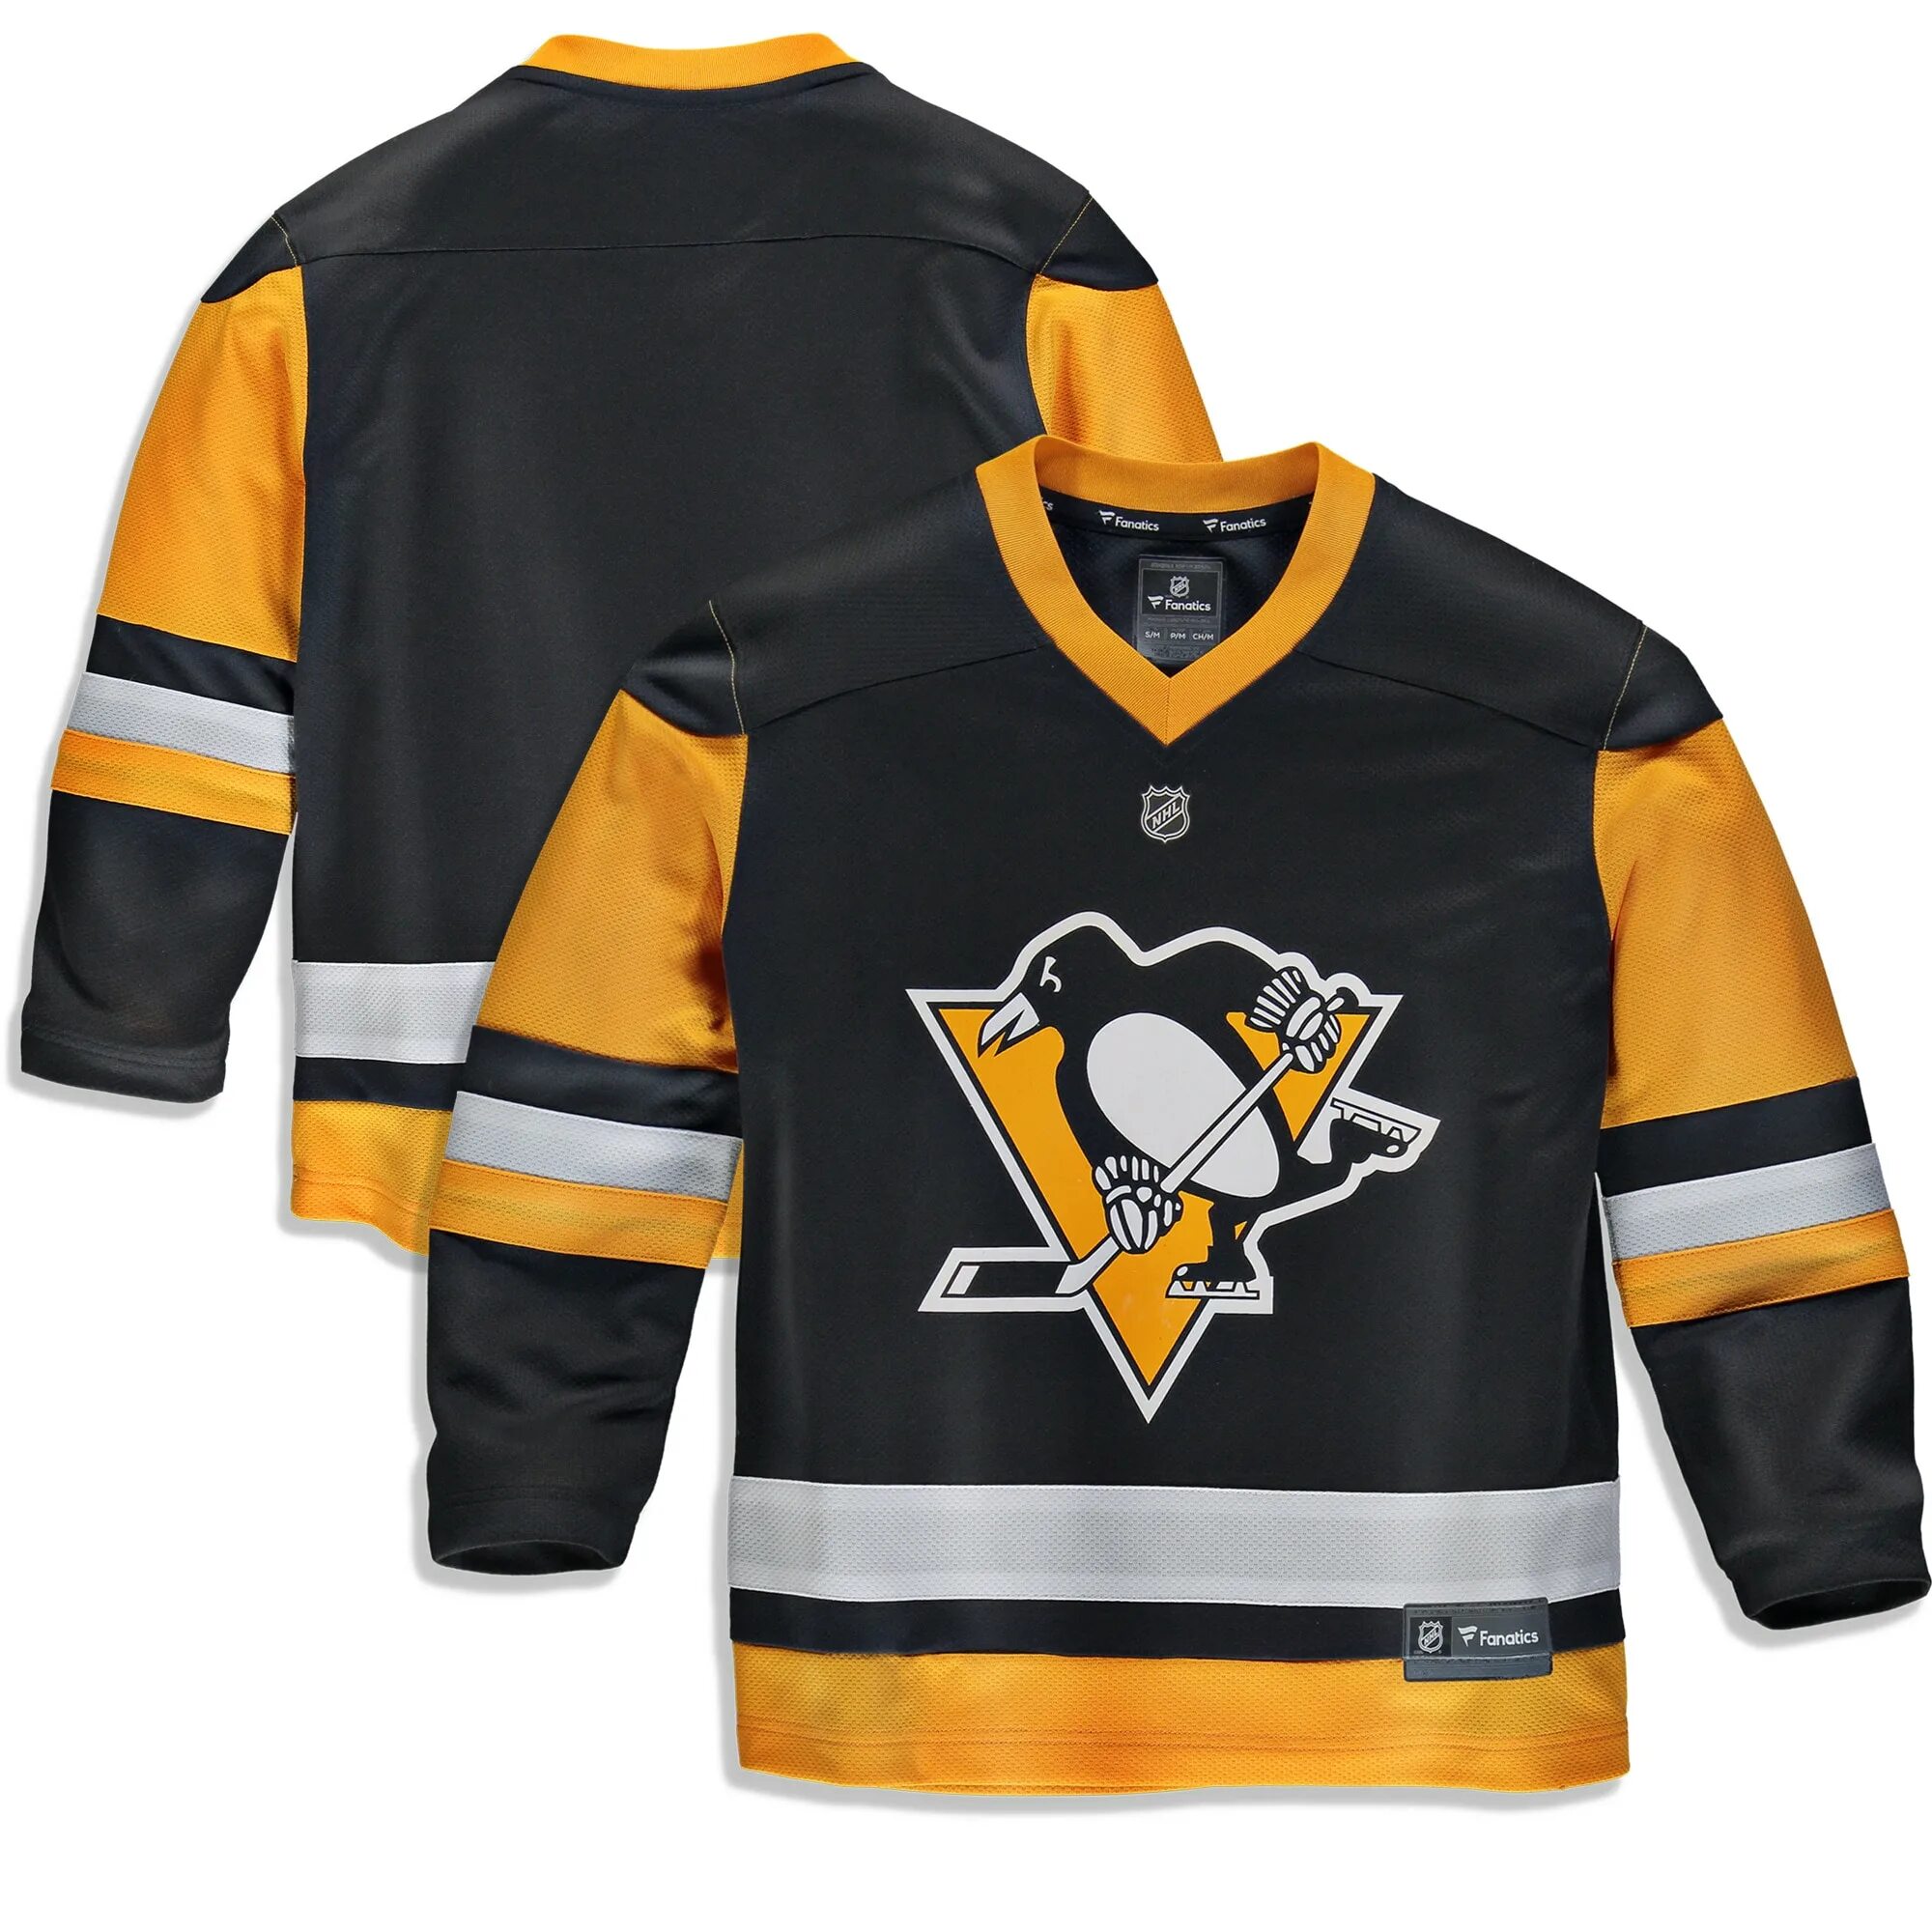 Джерси питтсбург пингвинз. Игровая футболка Pitsburg Penguins. Adidas Pittsburgh Penguins. Футболки НХЛ. NHL футболка.